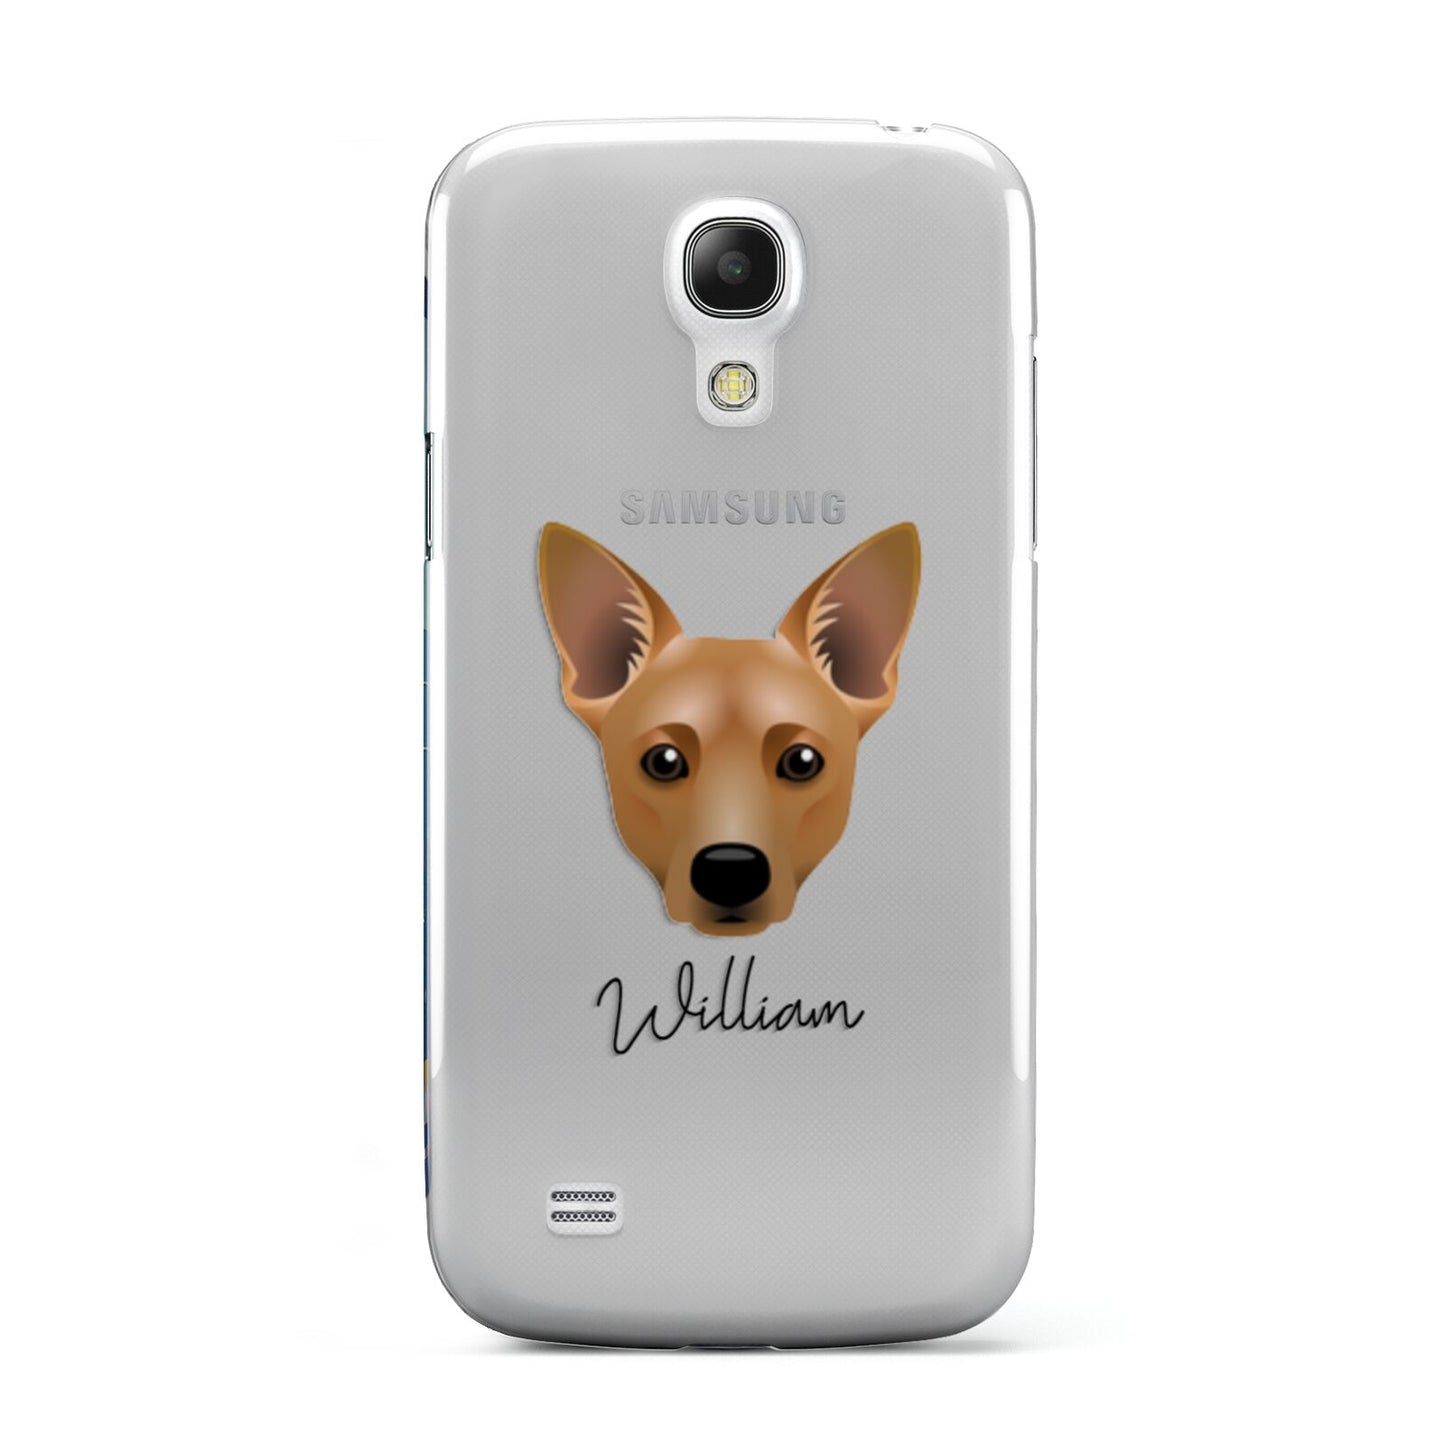 Cojack Personalised Samsung Galaxy S4 Mini Case